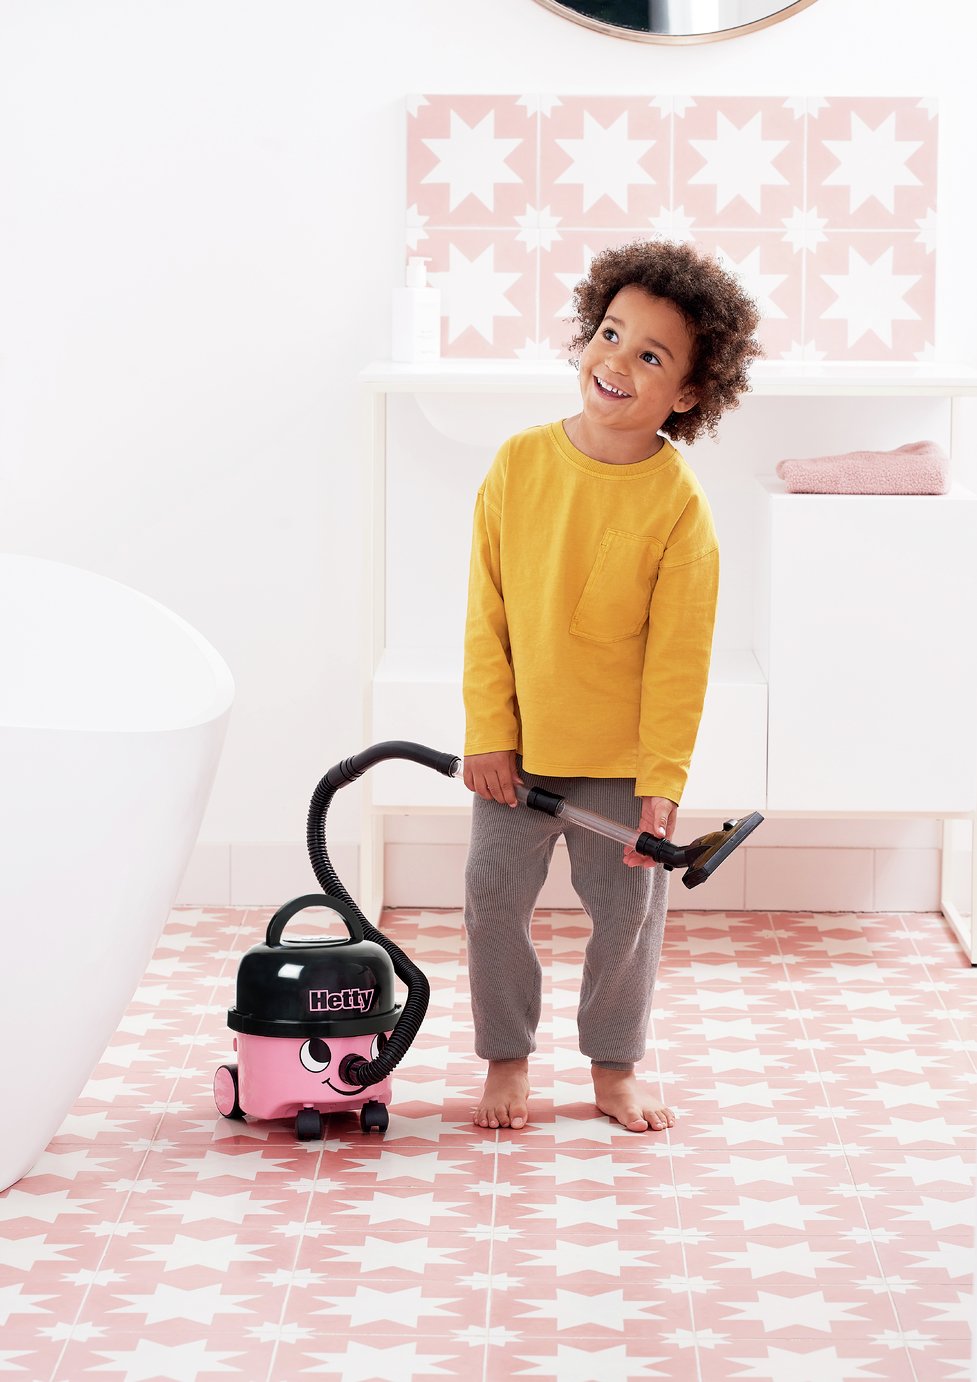 Little Hetty Children's Toy Vacuum Cleaner review